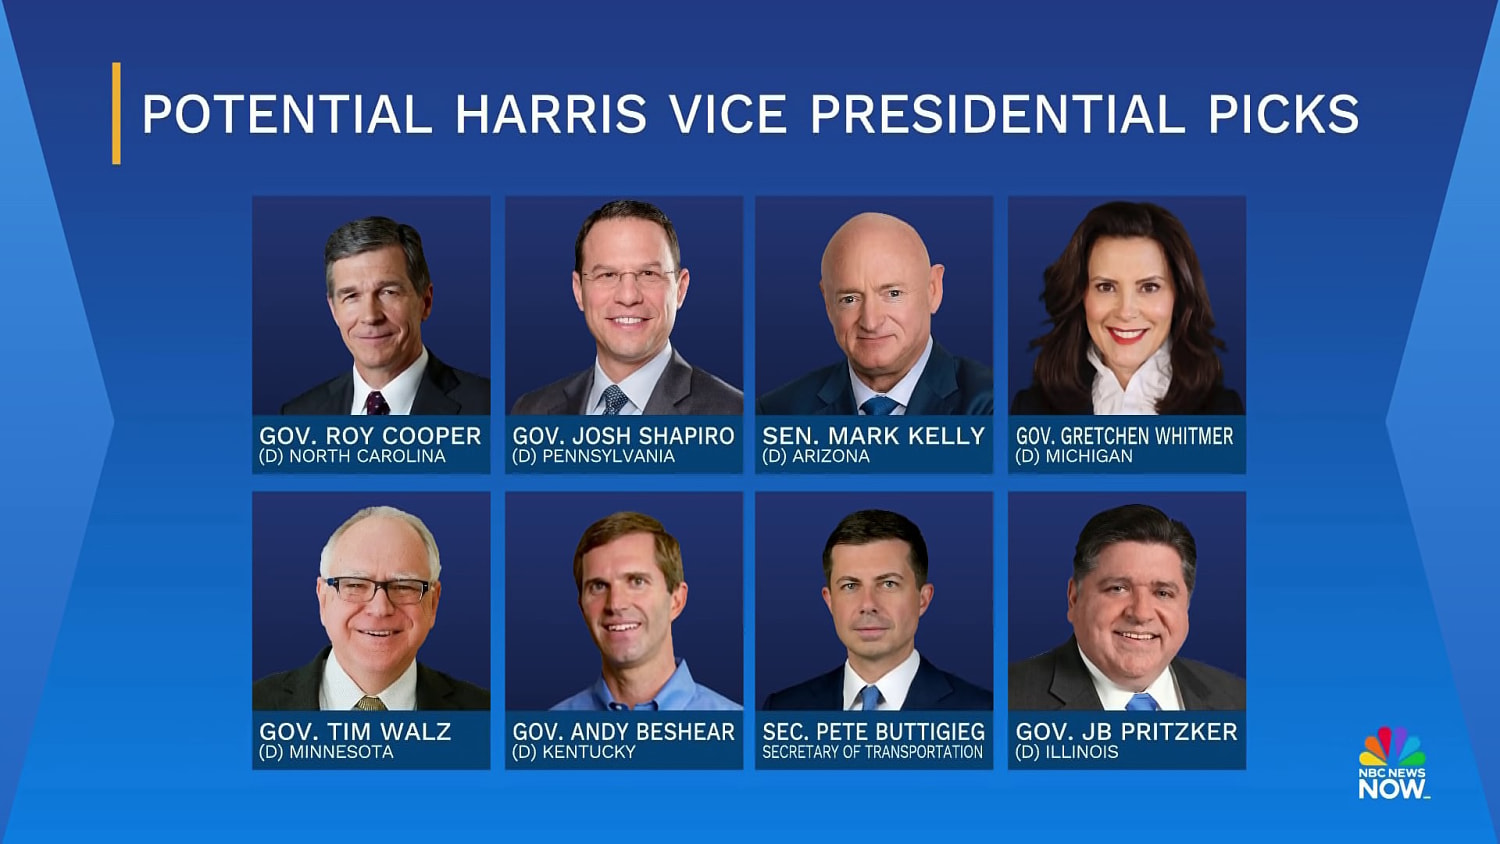 Josh Shapiro and Mark Kelly could be Kamala Harris’ running mate. Who are they?